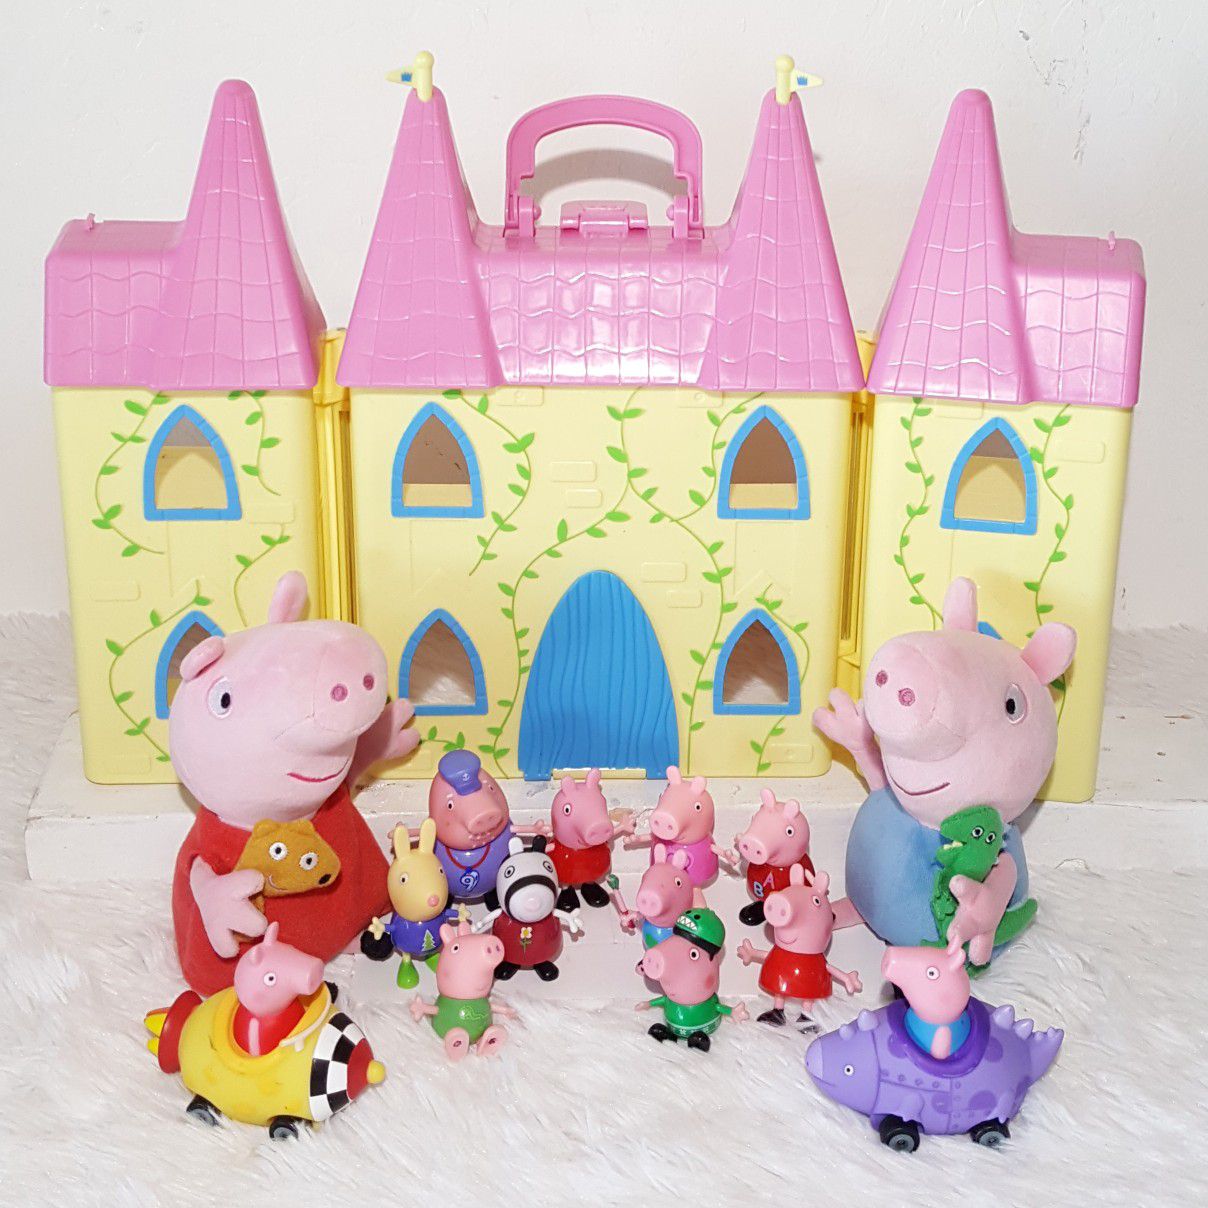 Peppa Pig castle figures and plush stuffed animal dolls